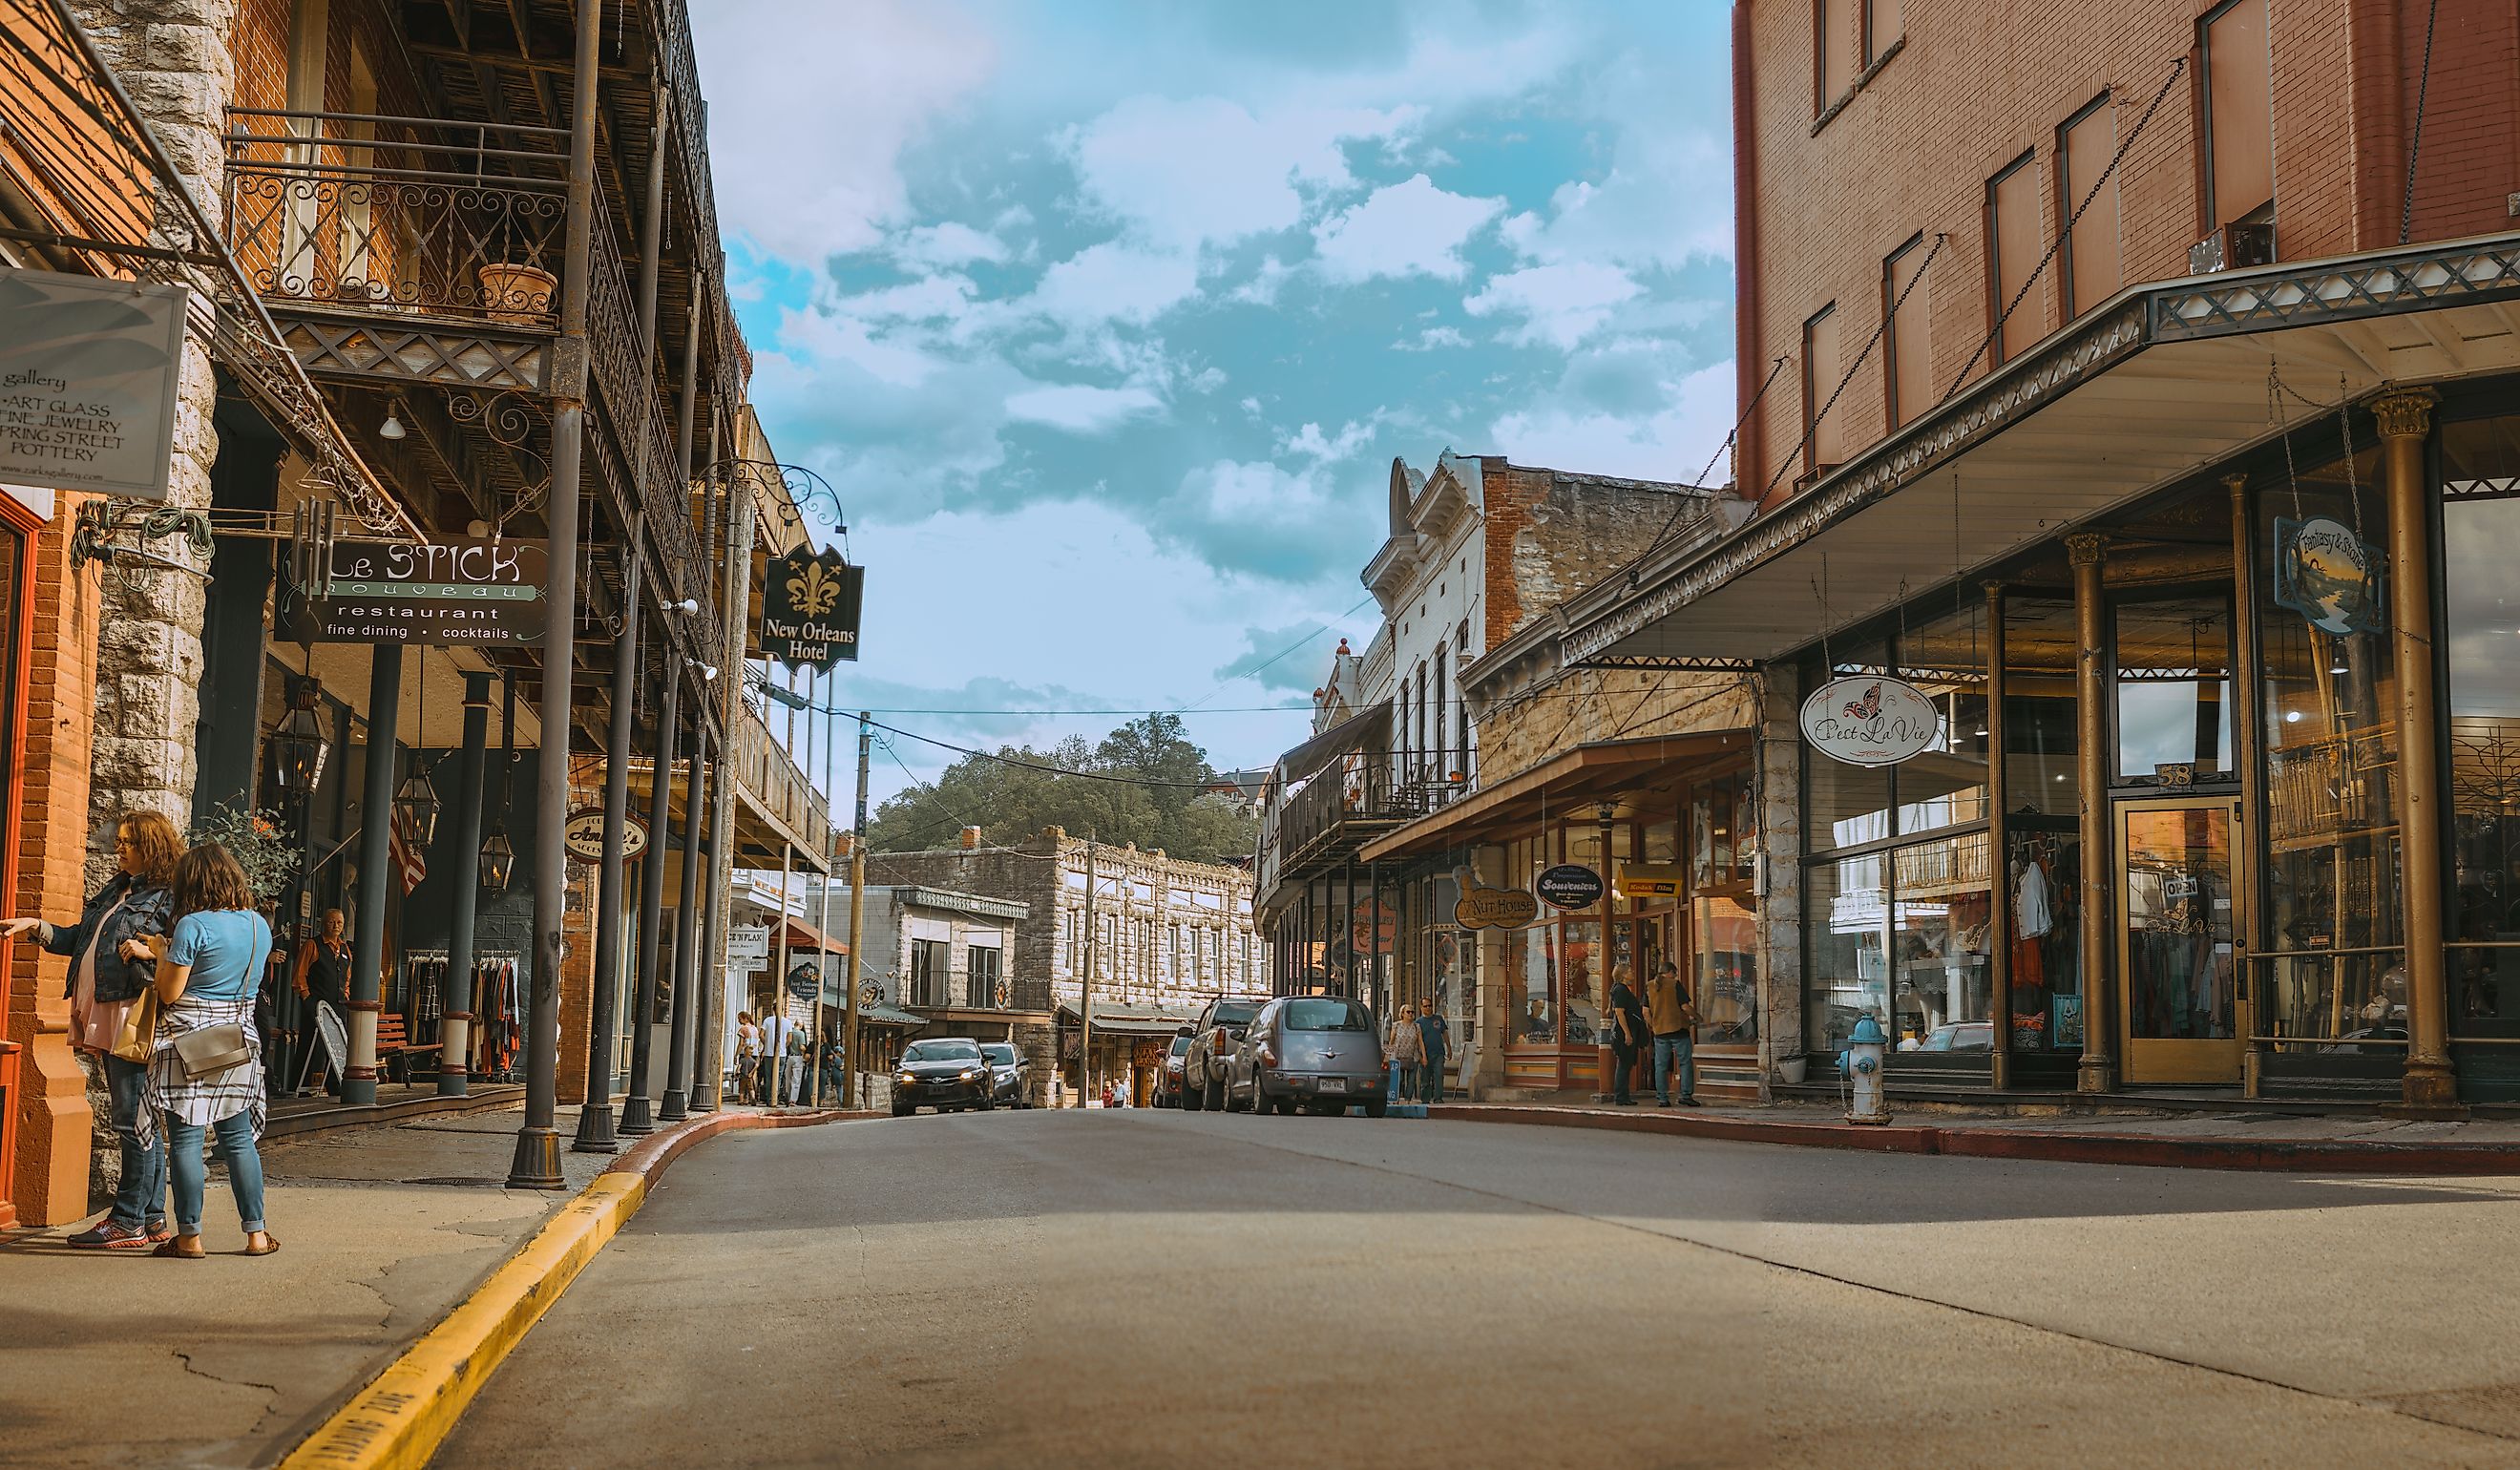 Beautiful street view downtown Eureka Springs, shop commerce destination area, must visit in Northwest Arkansas. Editorial credit: shuttersv / Shutterstock.com